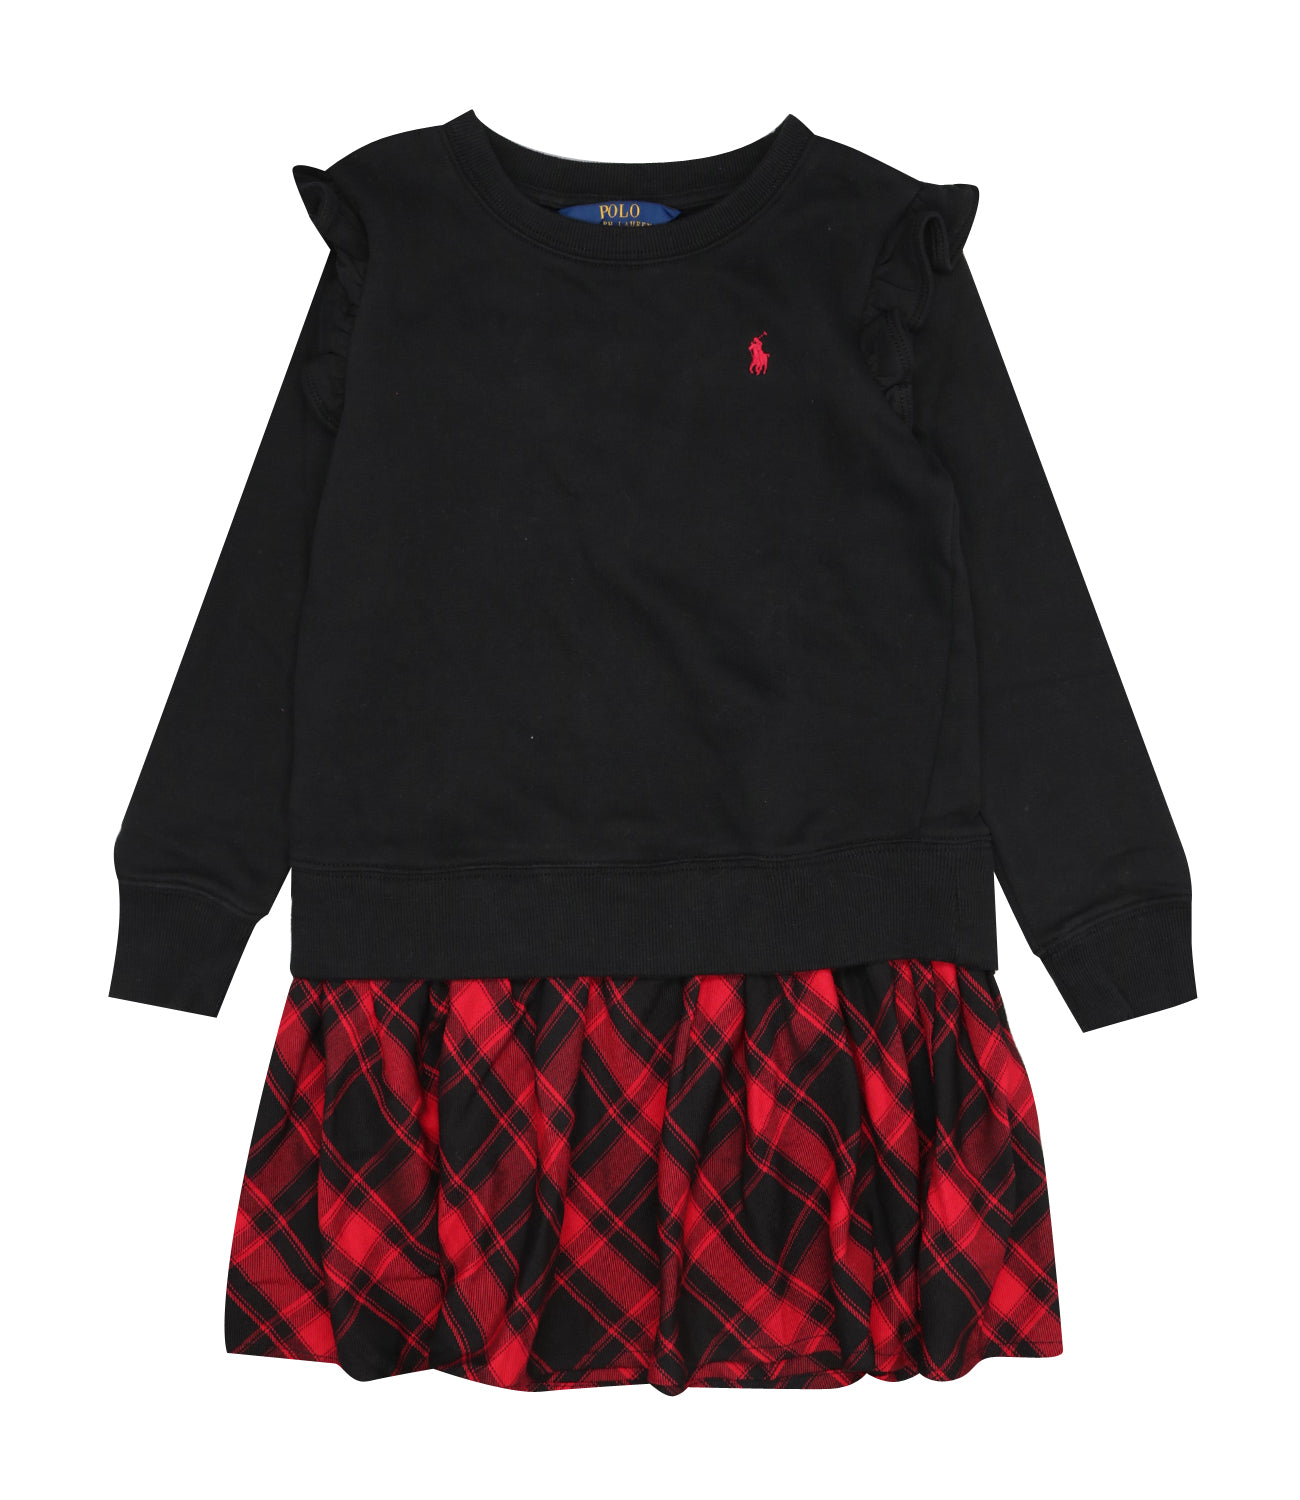 Ralph Lauren Childrenswear | Black and Red Dress